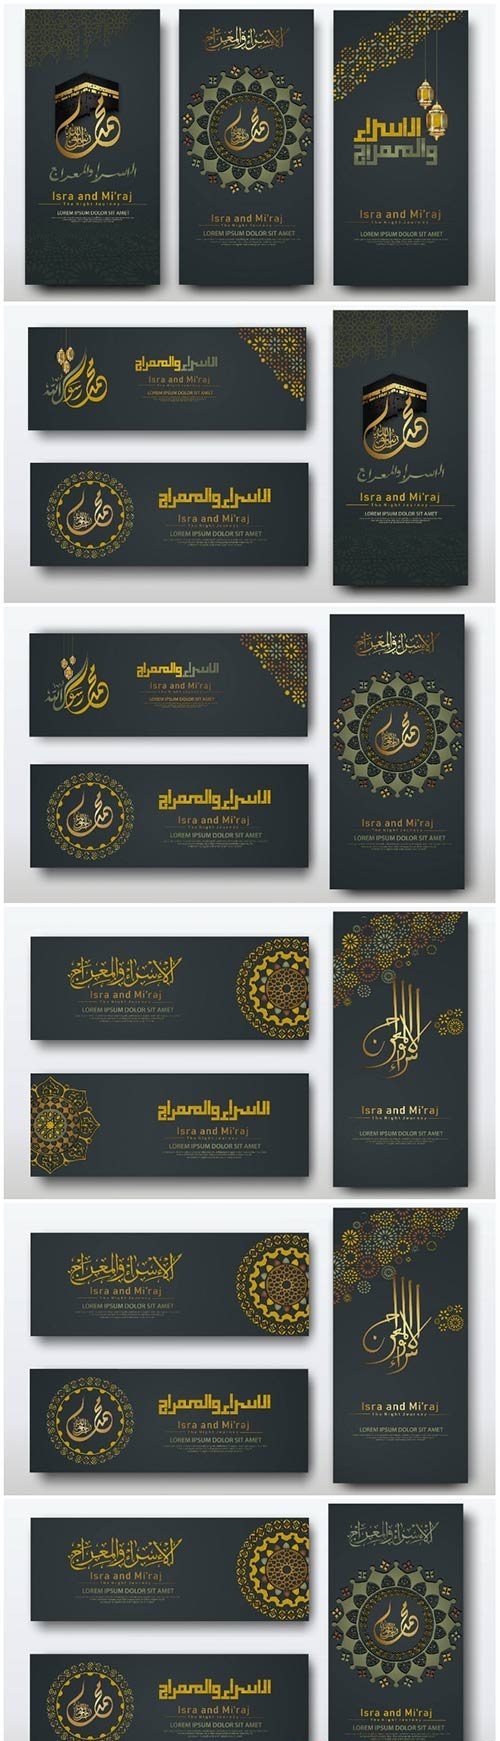 Vector greeting card with elegant and futuristic islamic design